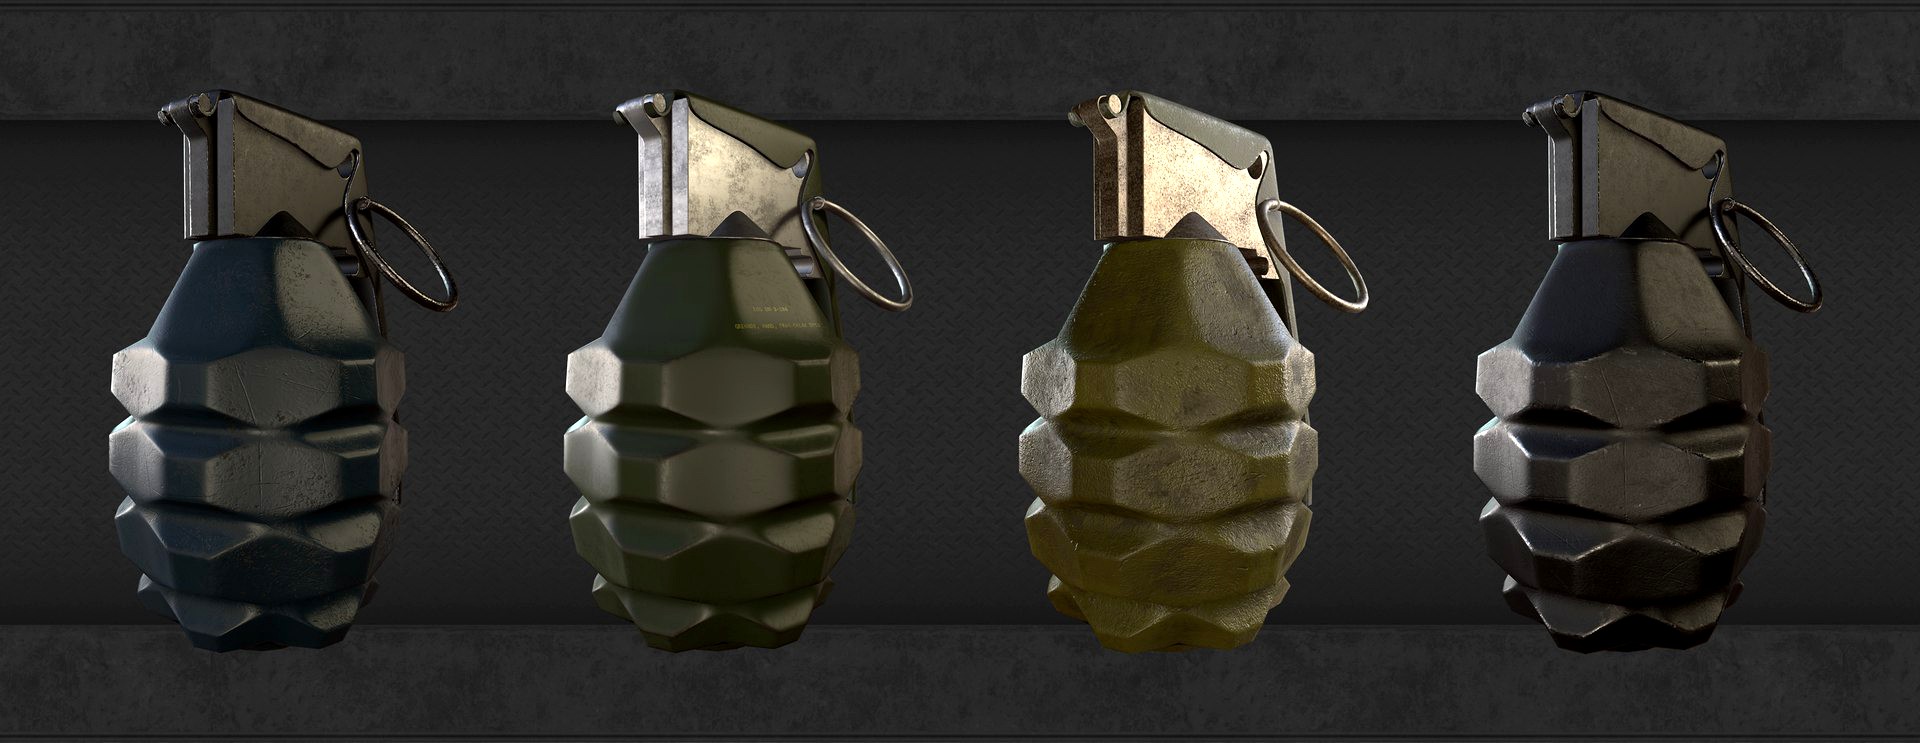 Grenade style